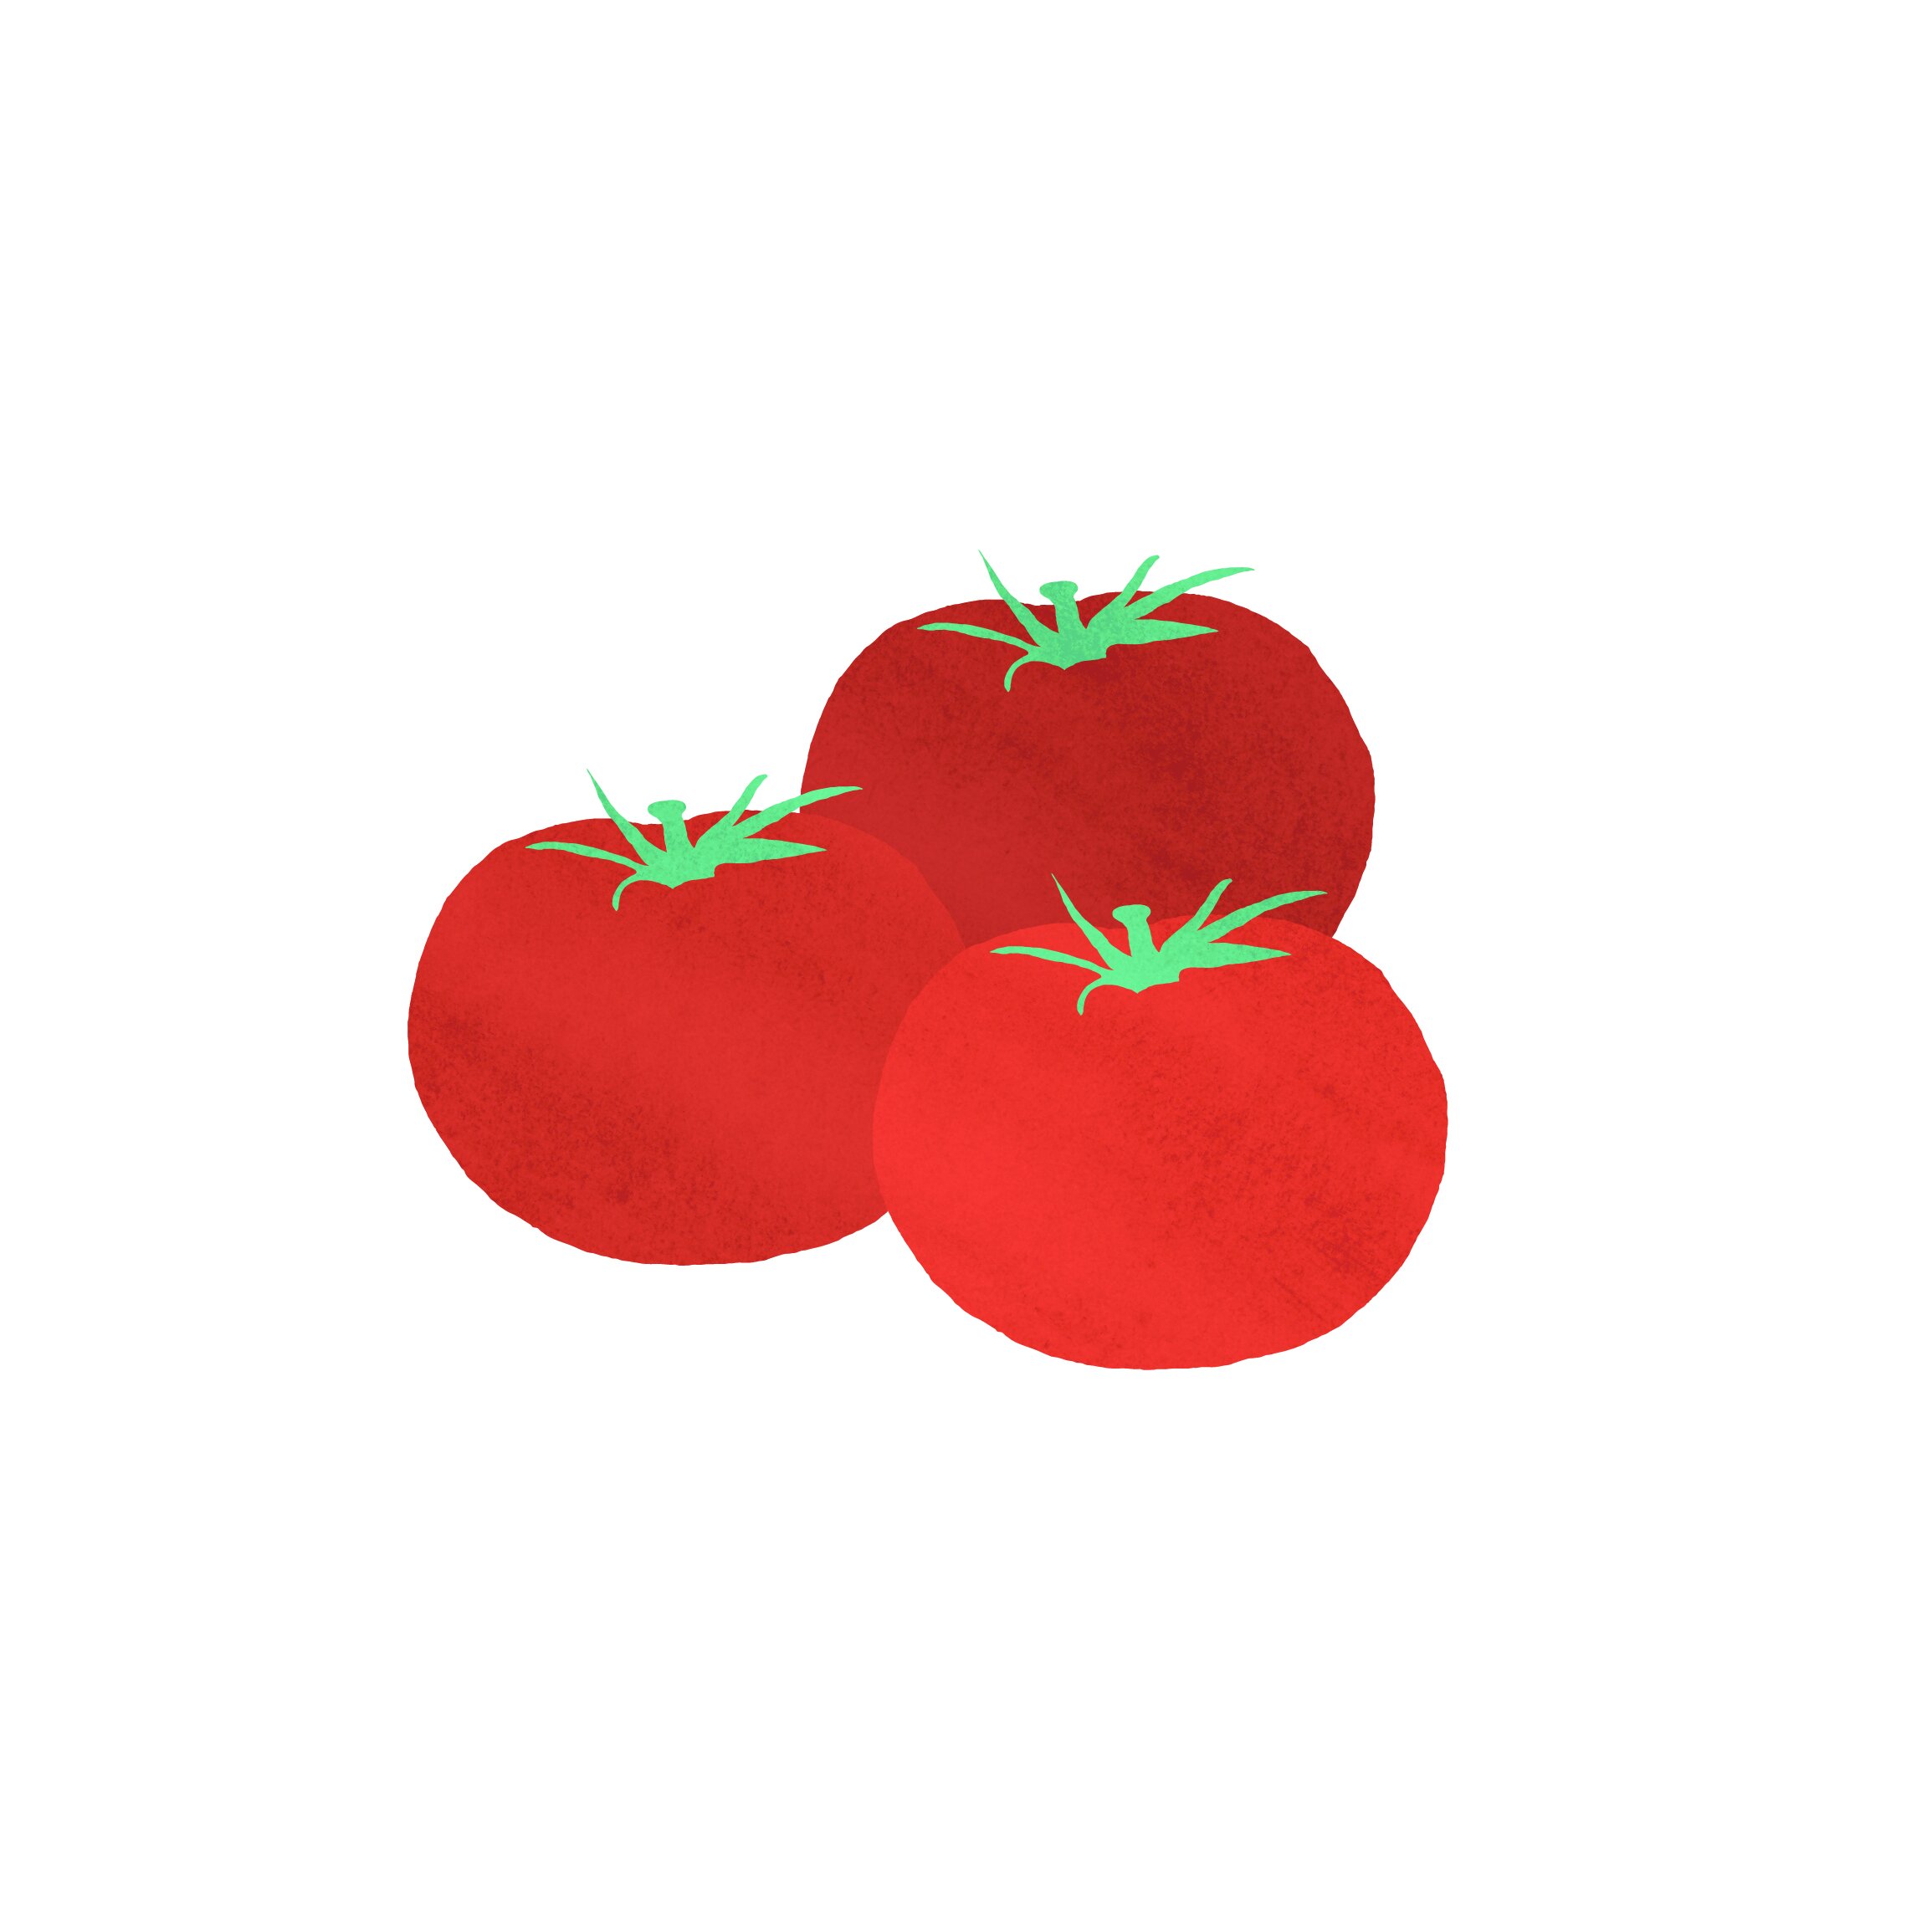 7638_VeganSociety_Food_Tomatoes.jpg